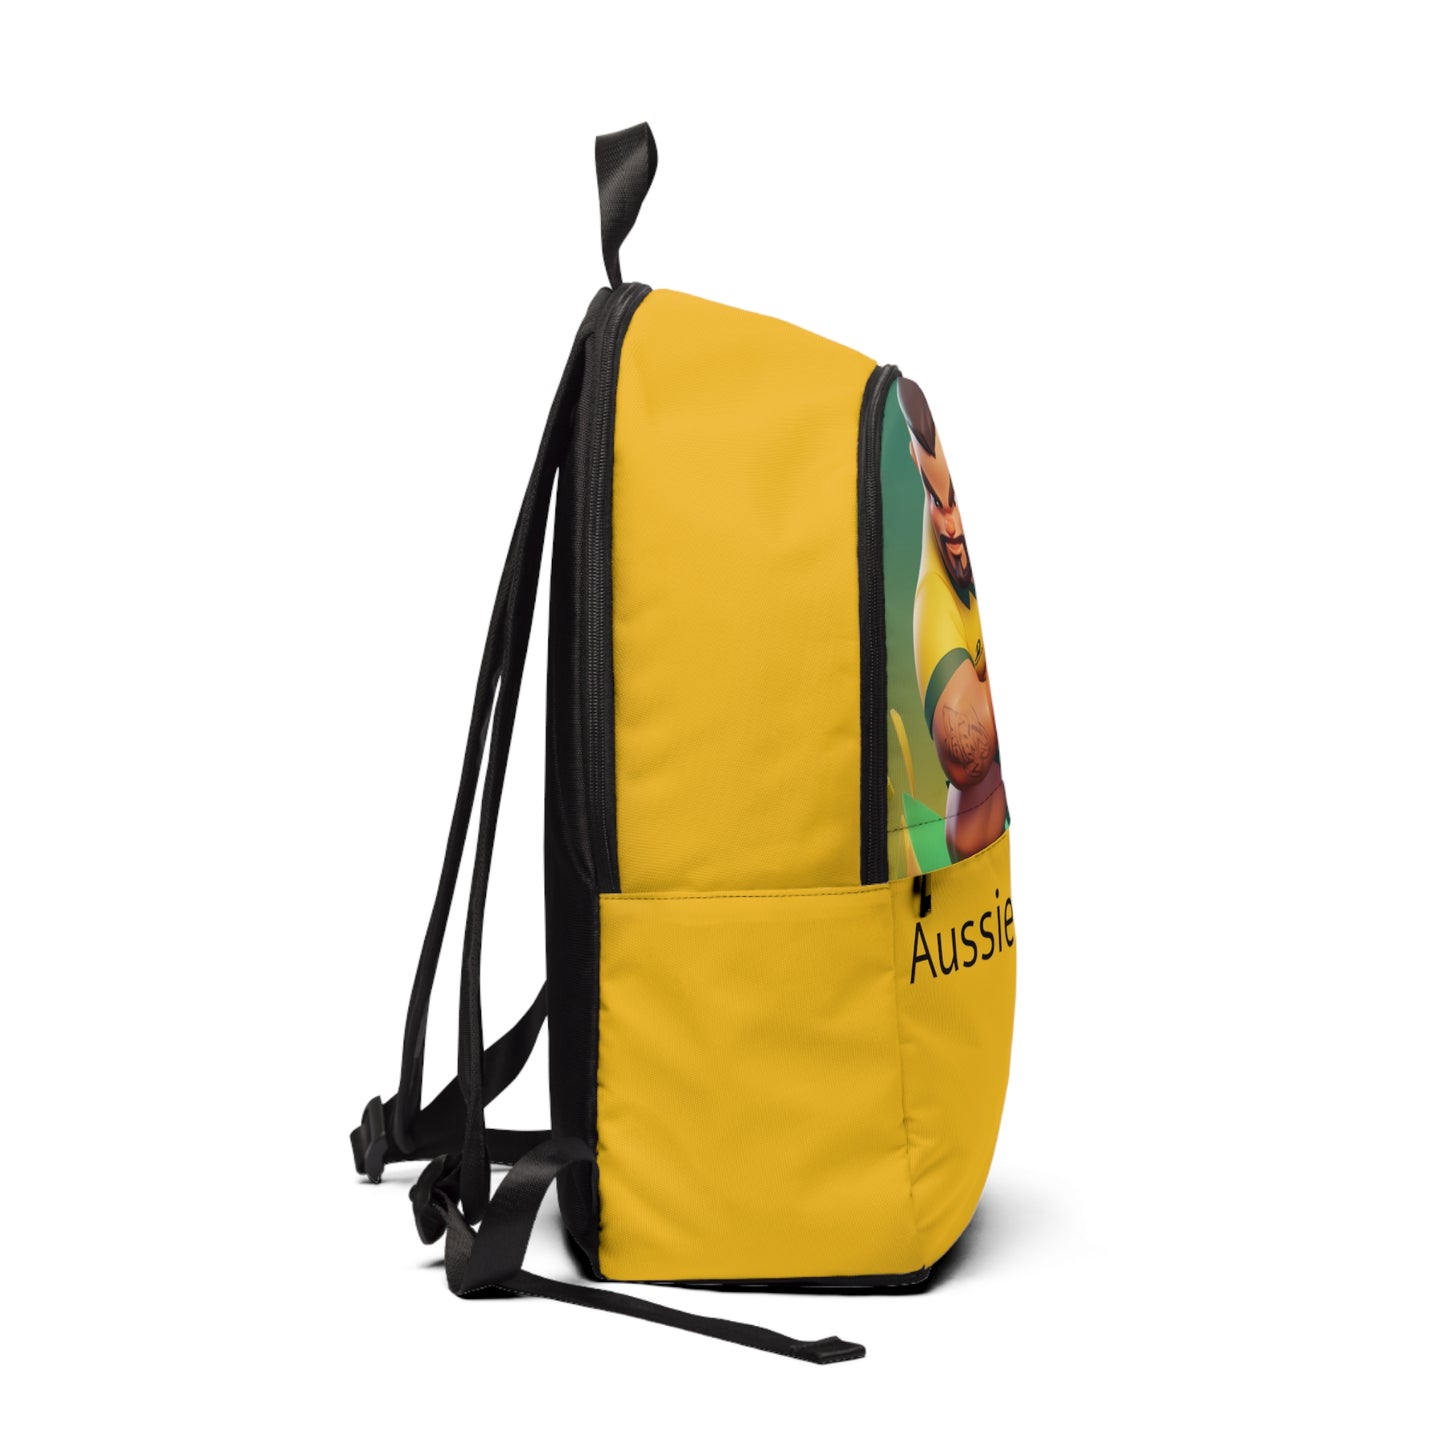 Aussie Backpack